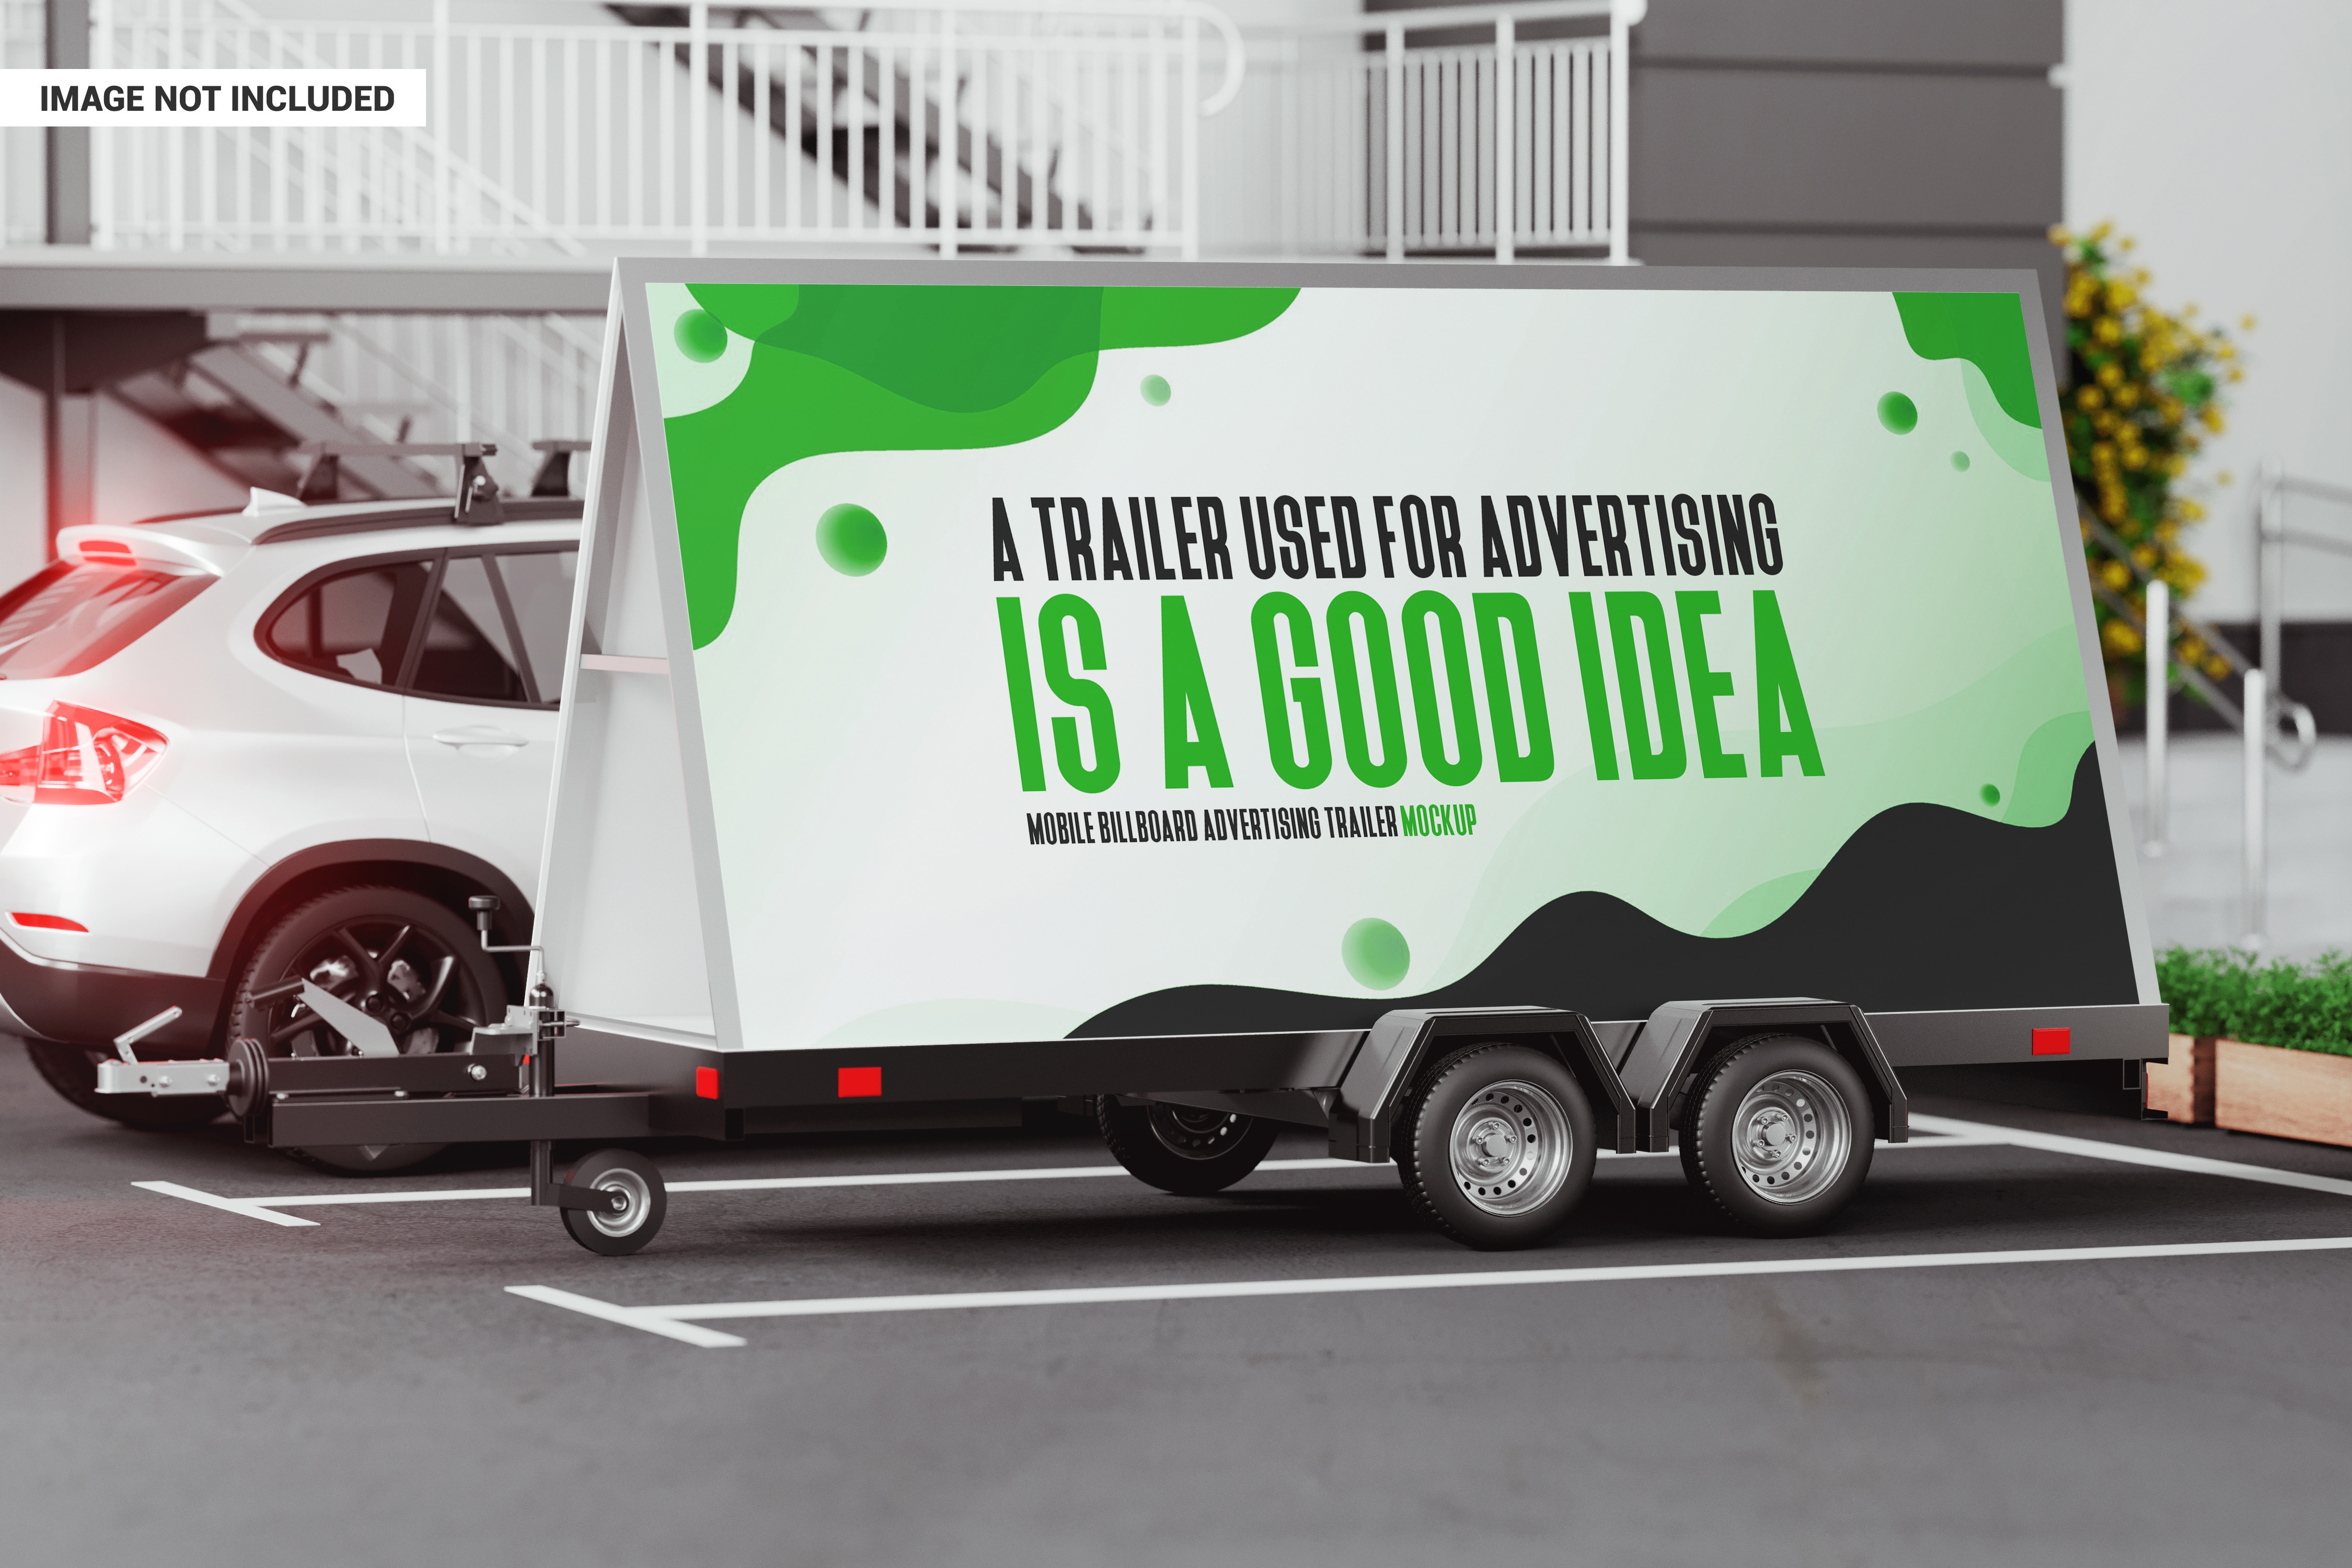 Mobile billboard advertising trailer mockup